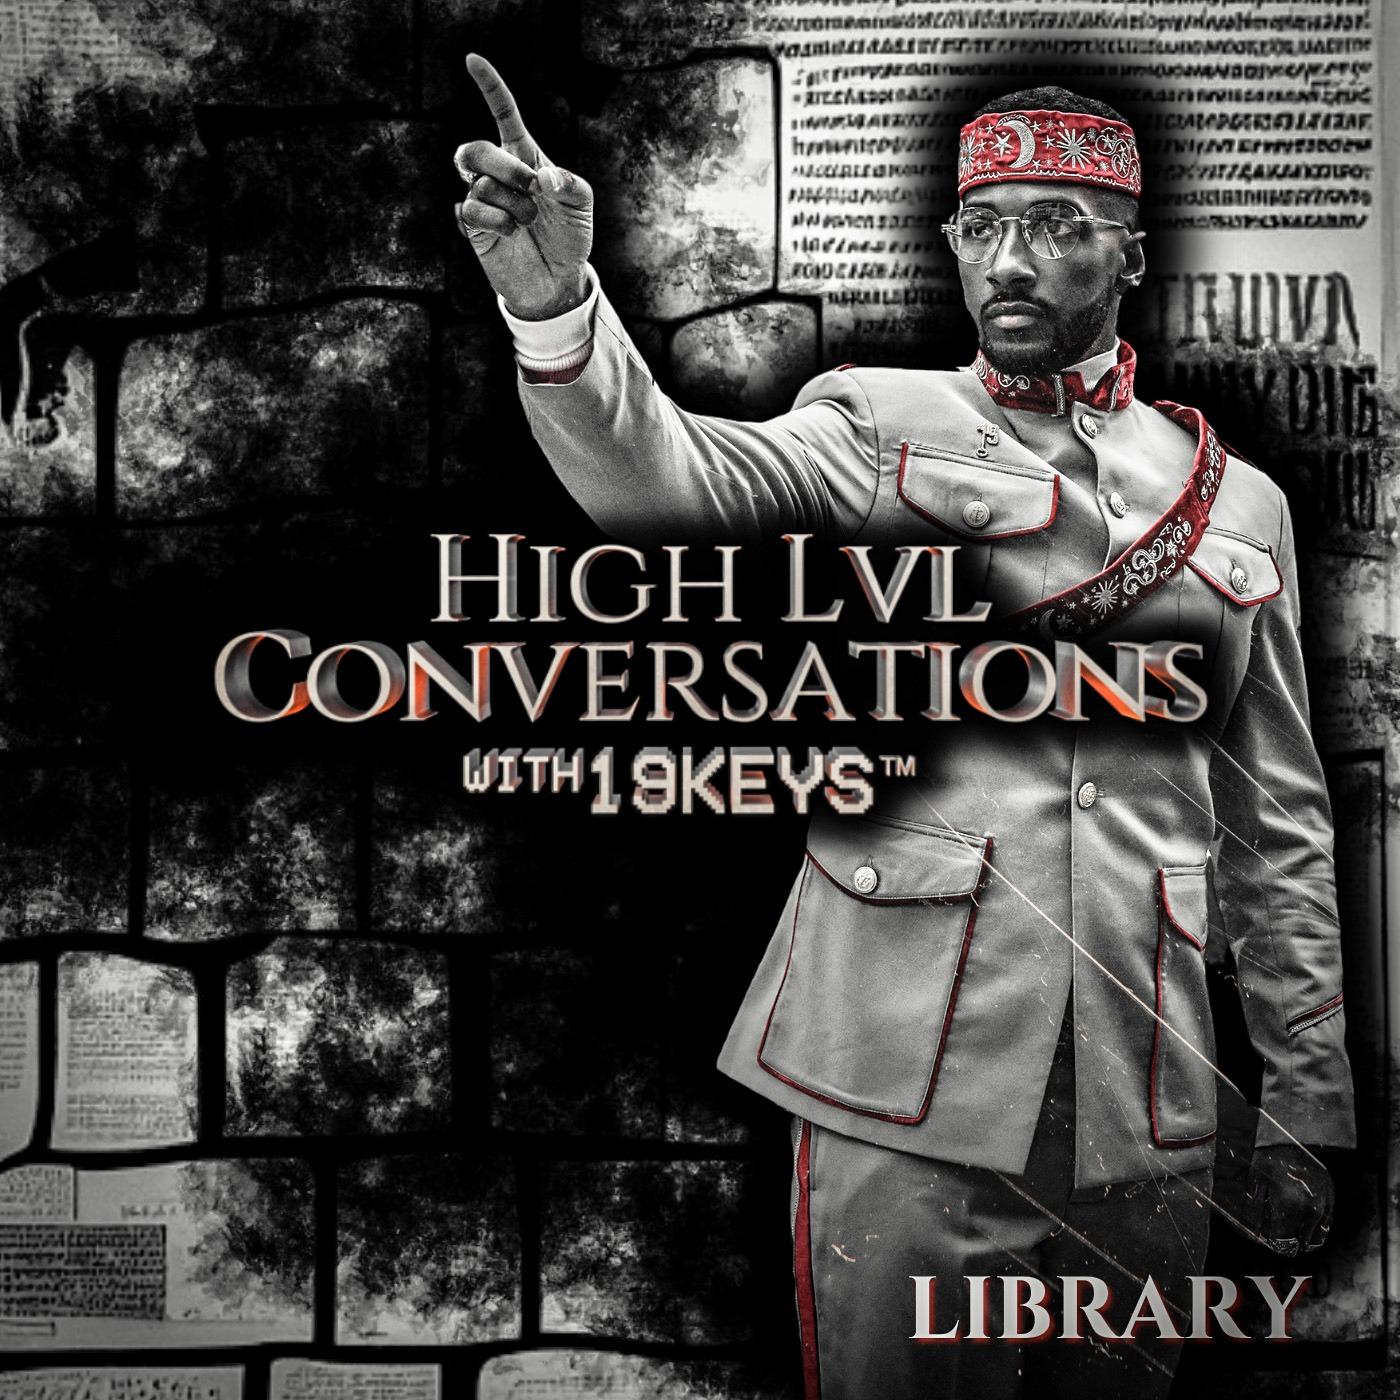 high level conversations tour 2023